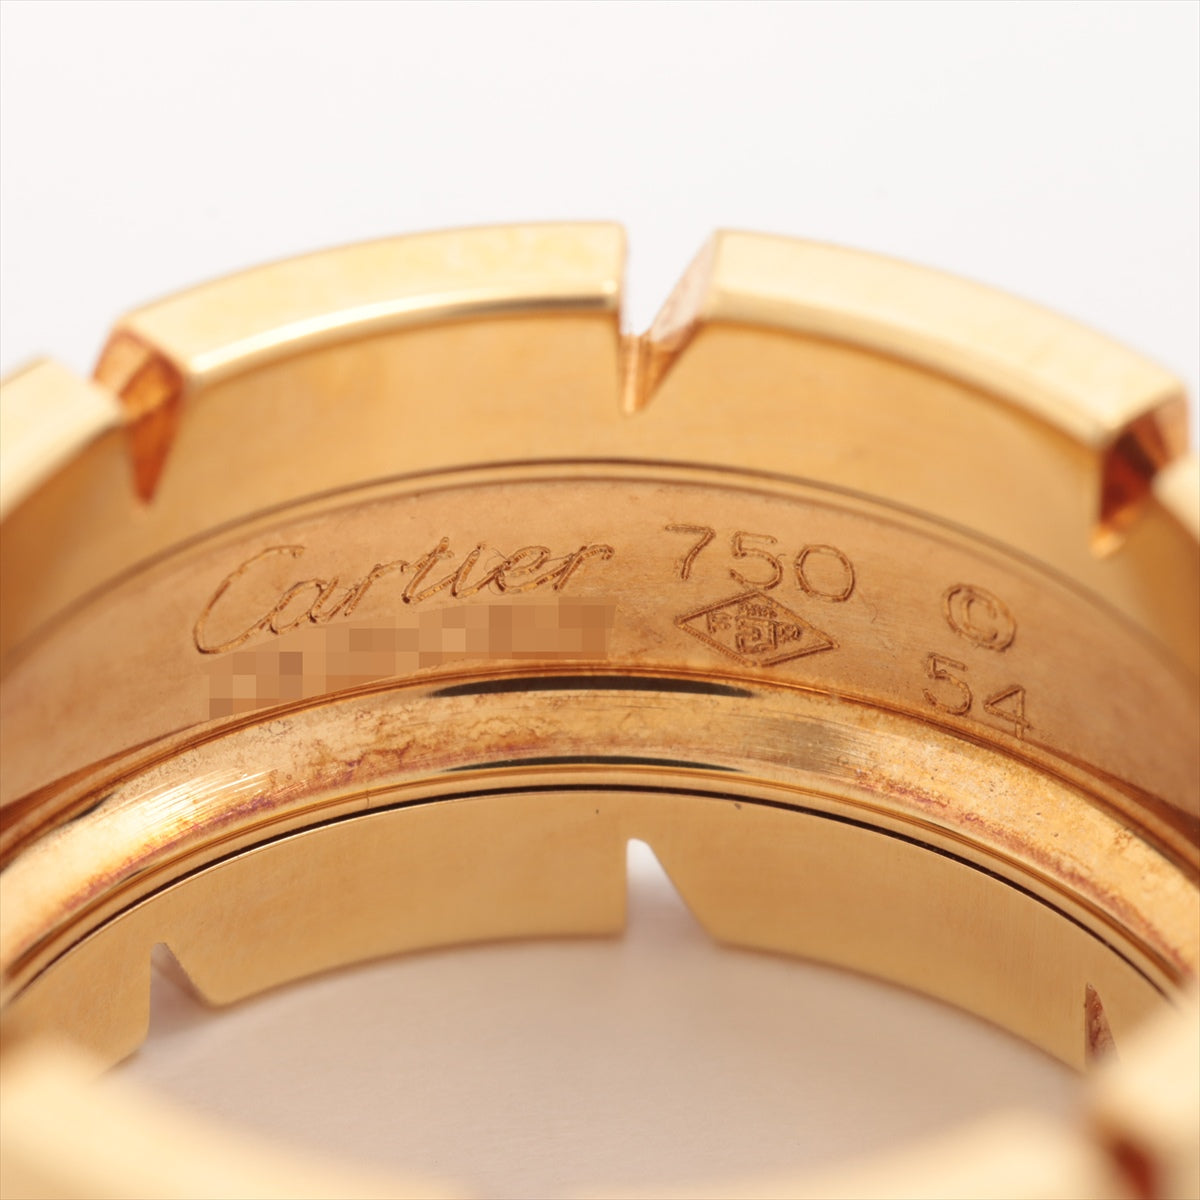 Cartier Tank Rings 750 (YG) 13.4g